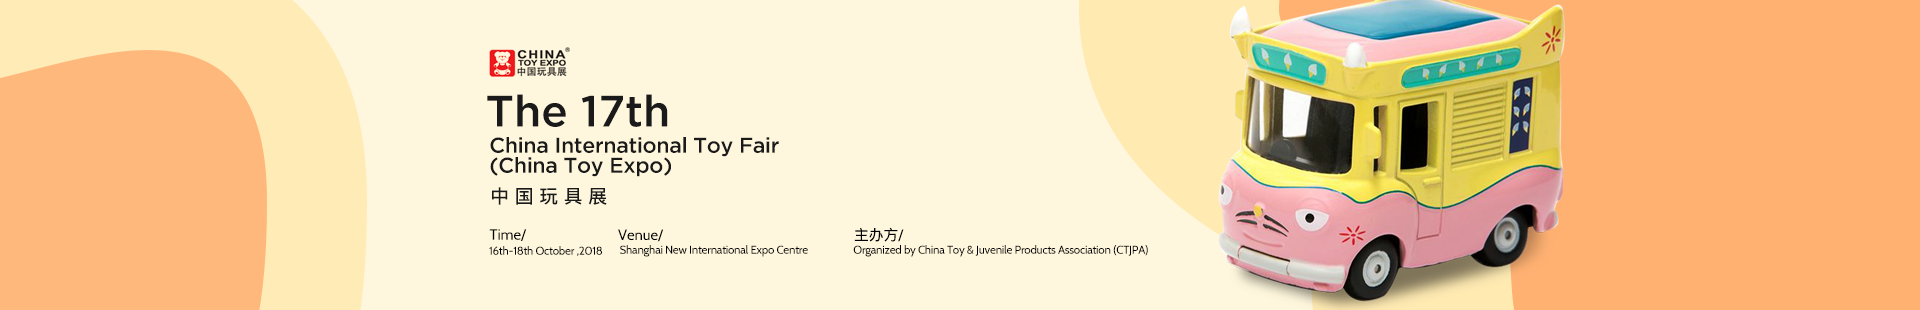 The 17th China International Toy Fair